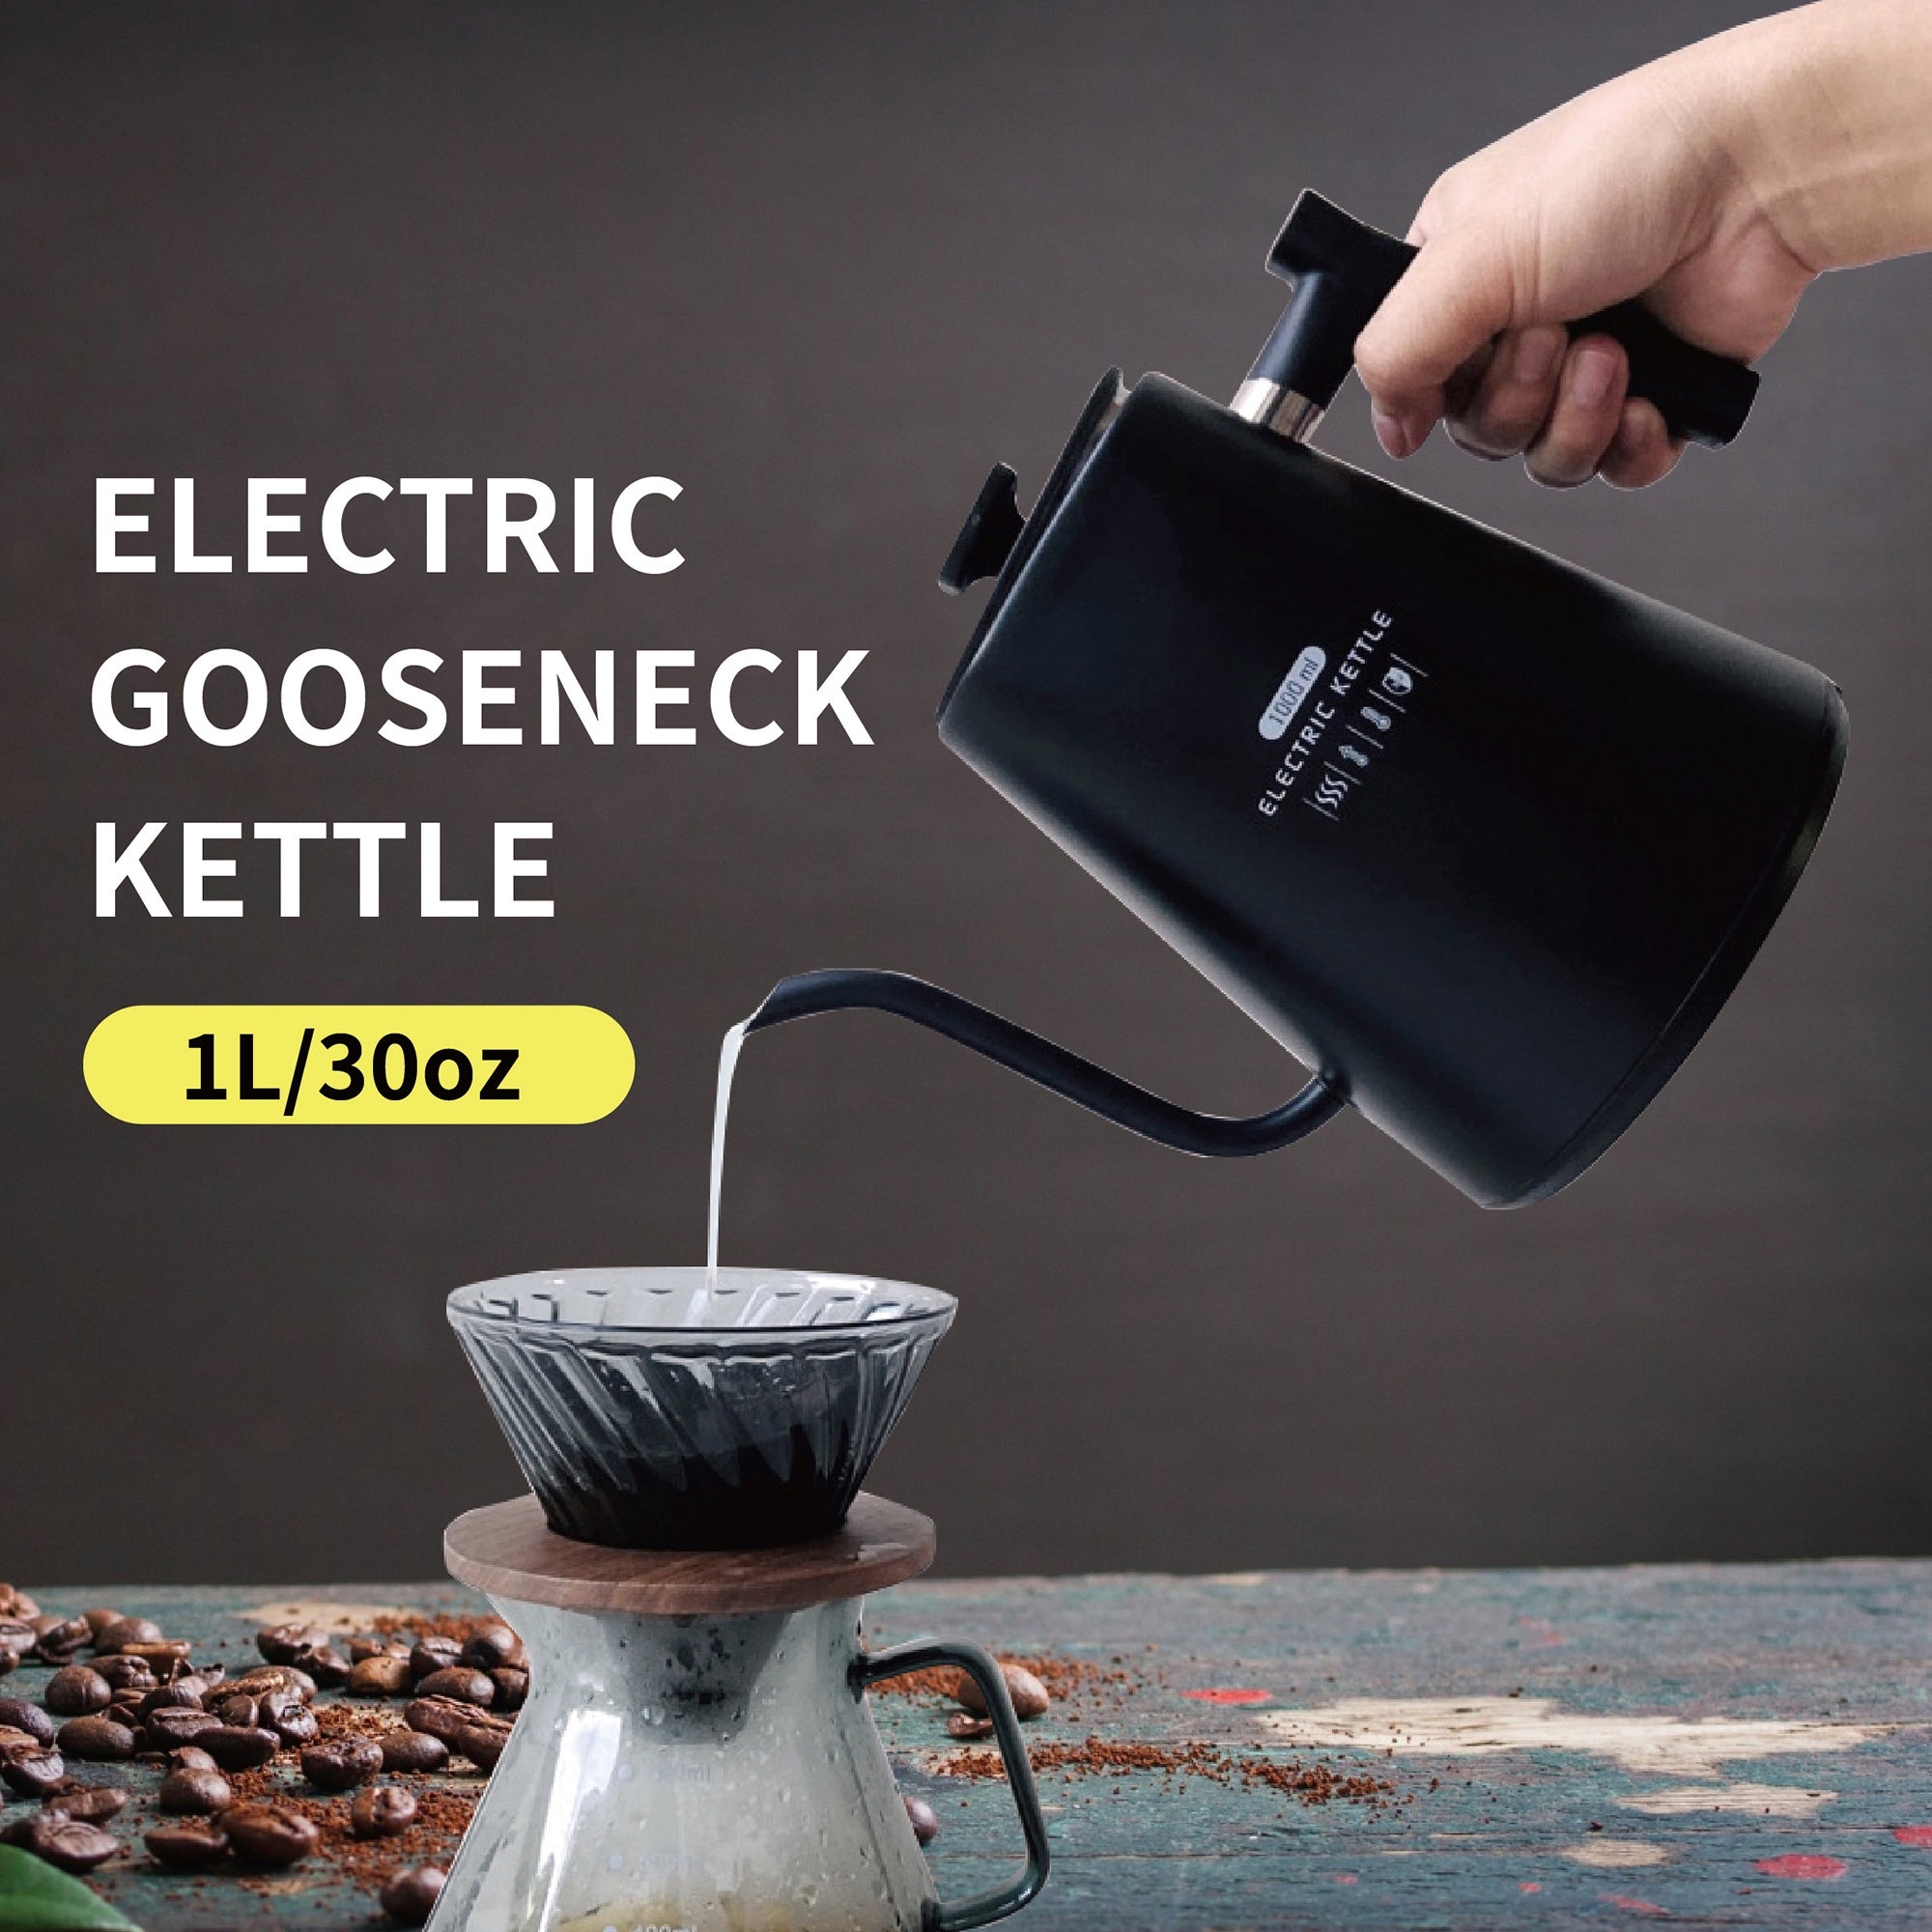 Pour-Over Coffee Gooseneck Kettle, Size: 22 oz, Black